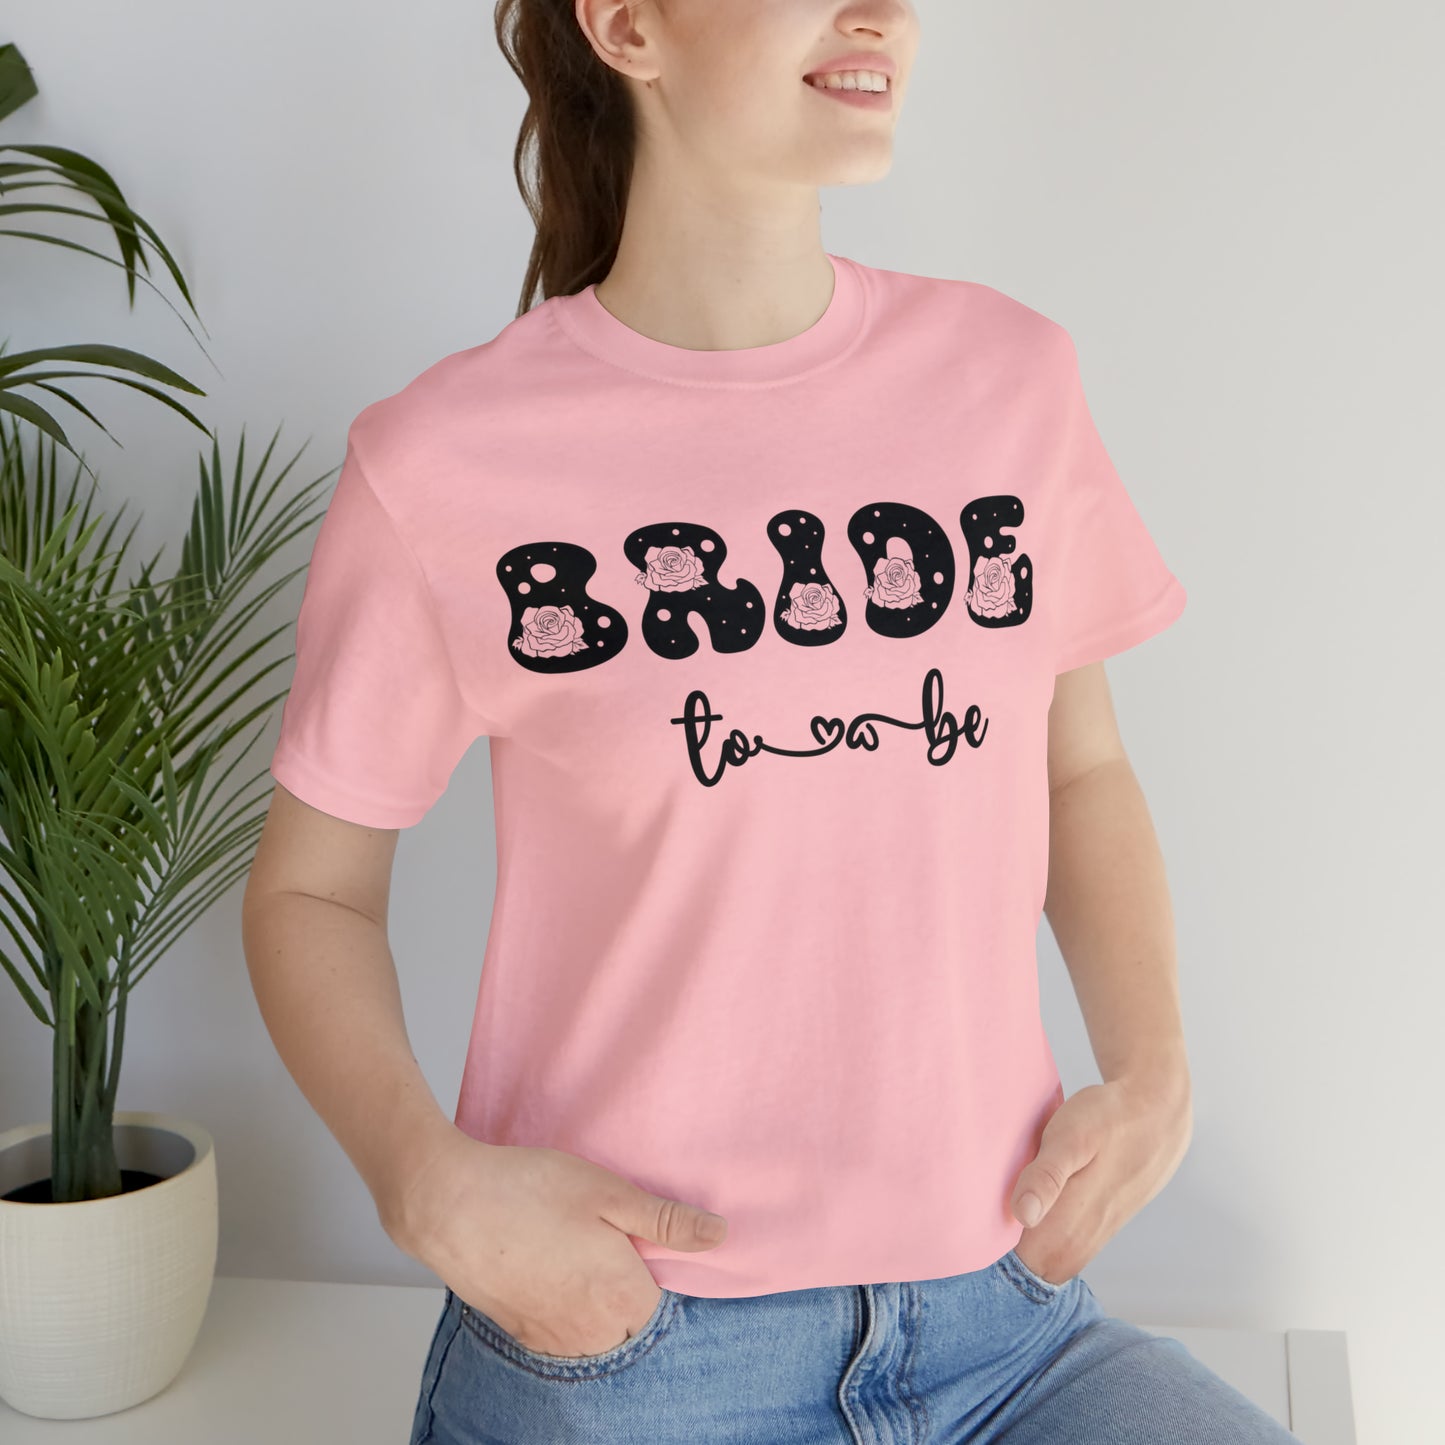 Future Bride Shirt, Bride To Be Shirt, Varsity Bride-to-be Shirt, Shirt for Bridal Party, Bachelorette Shirt, T466